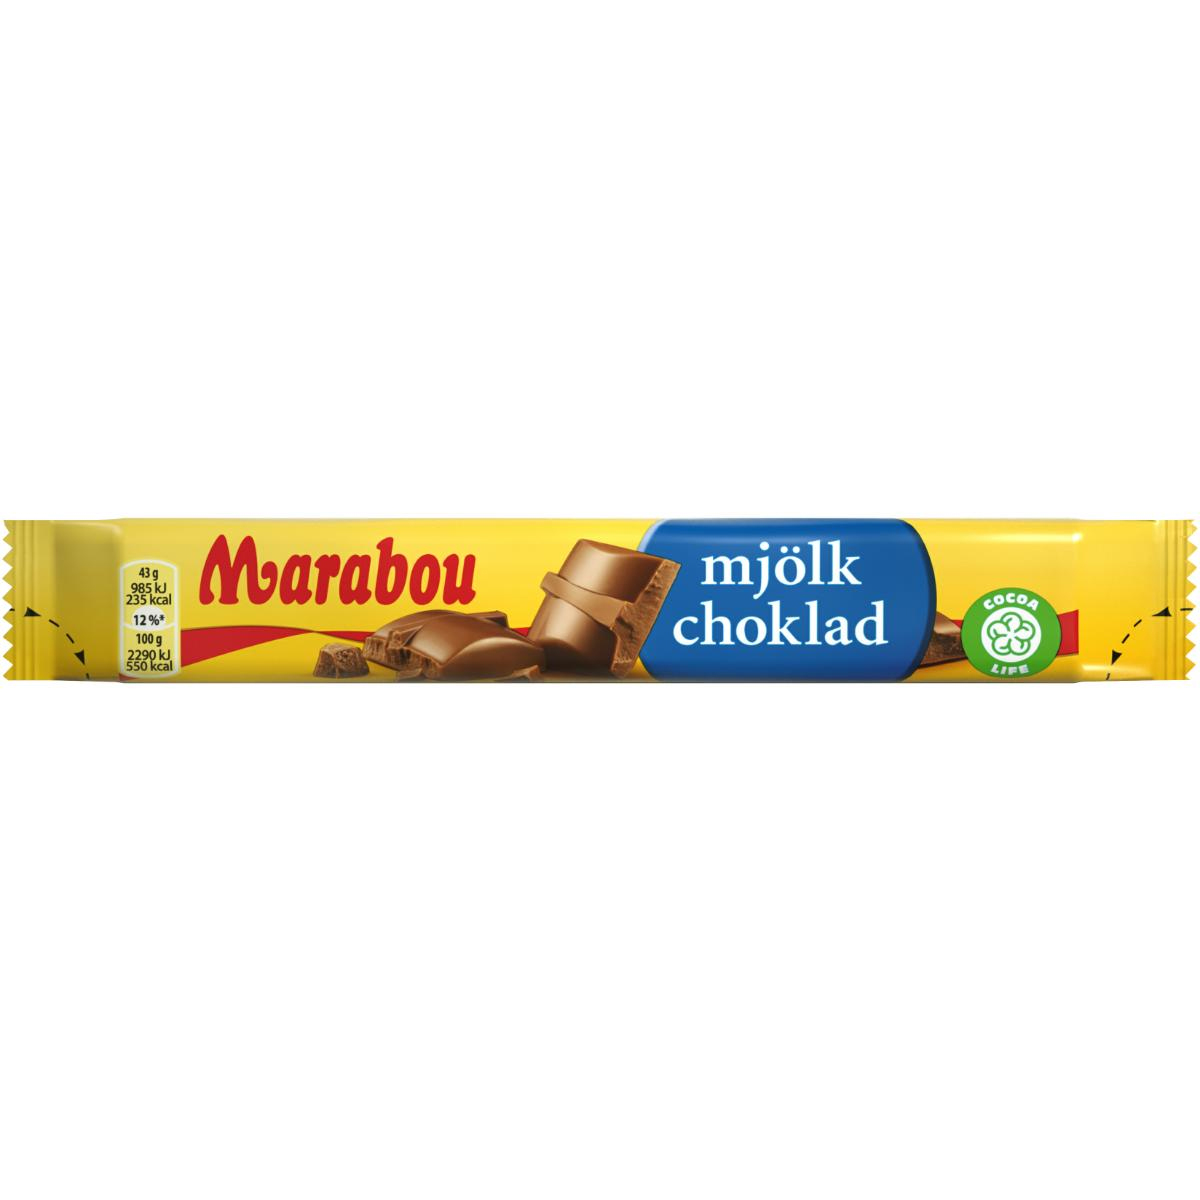 Marabou Milk chocolate - 43 grams